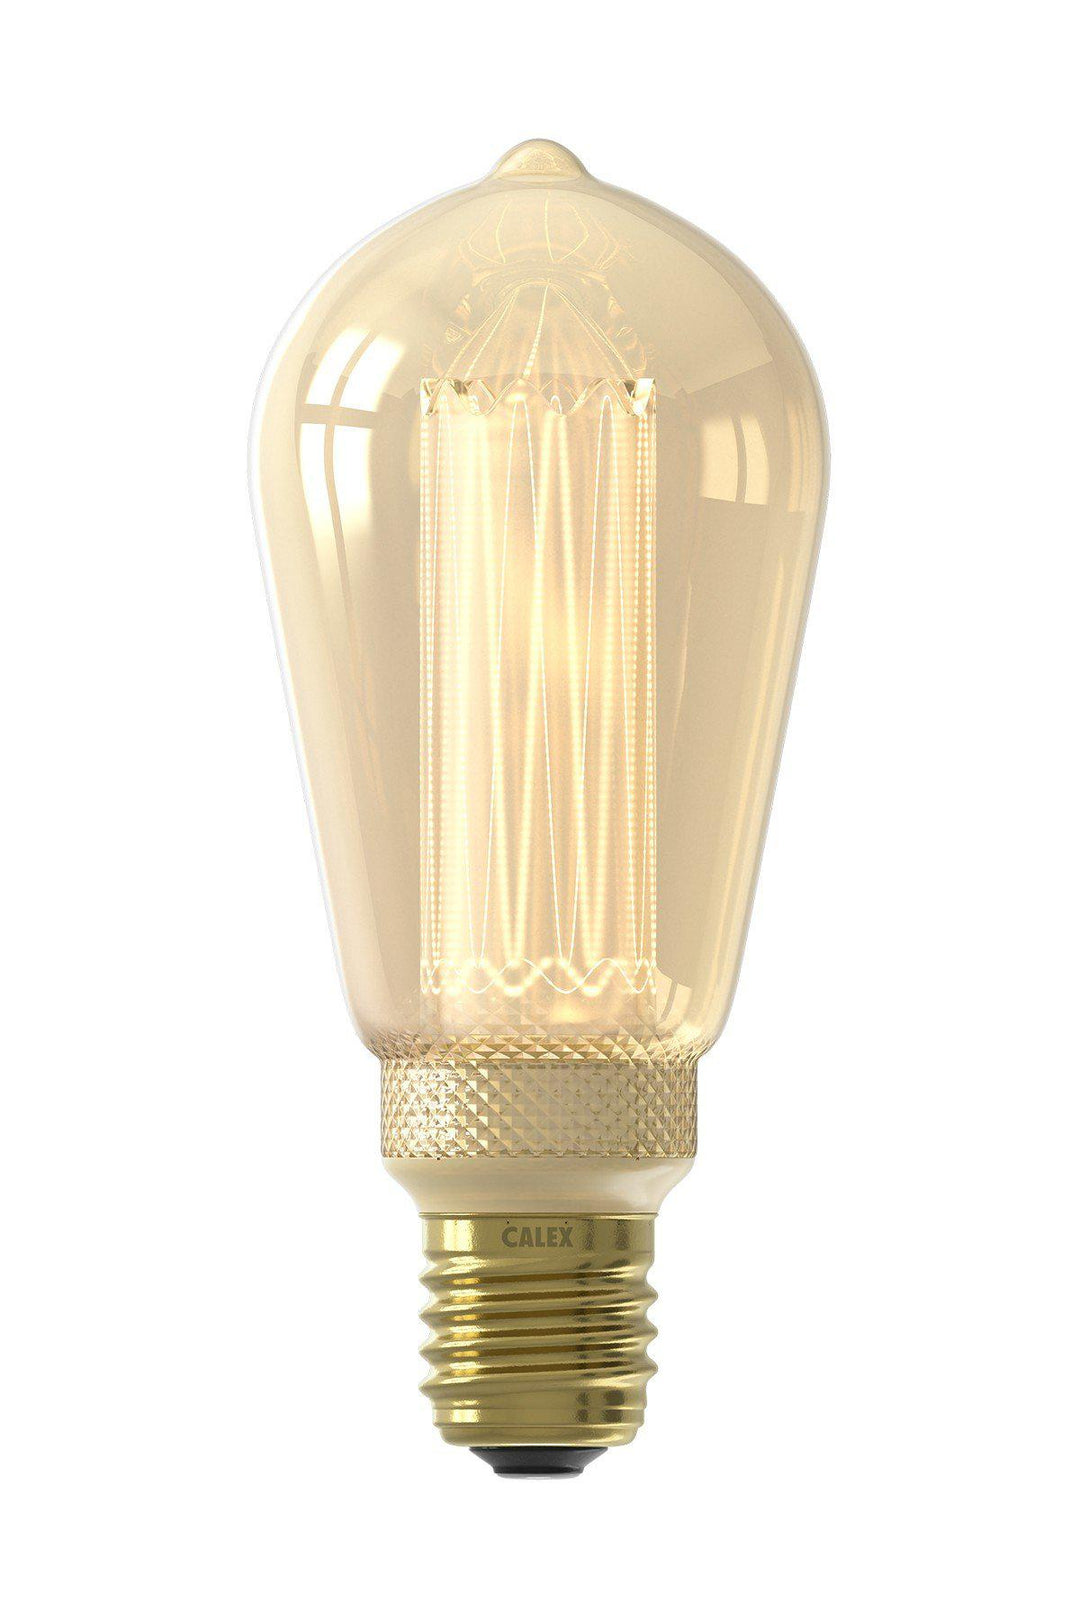 Calex 421694 | LED White Crown Bulb | E27 | T32L | 3.5w